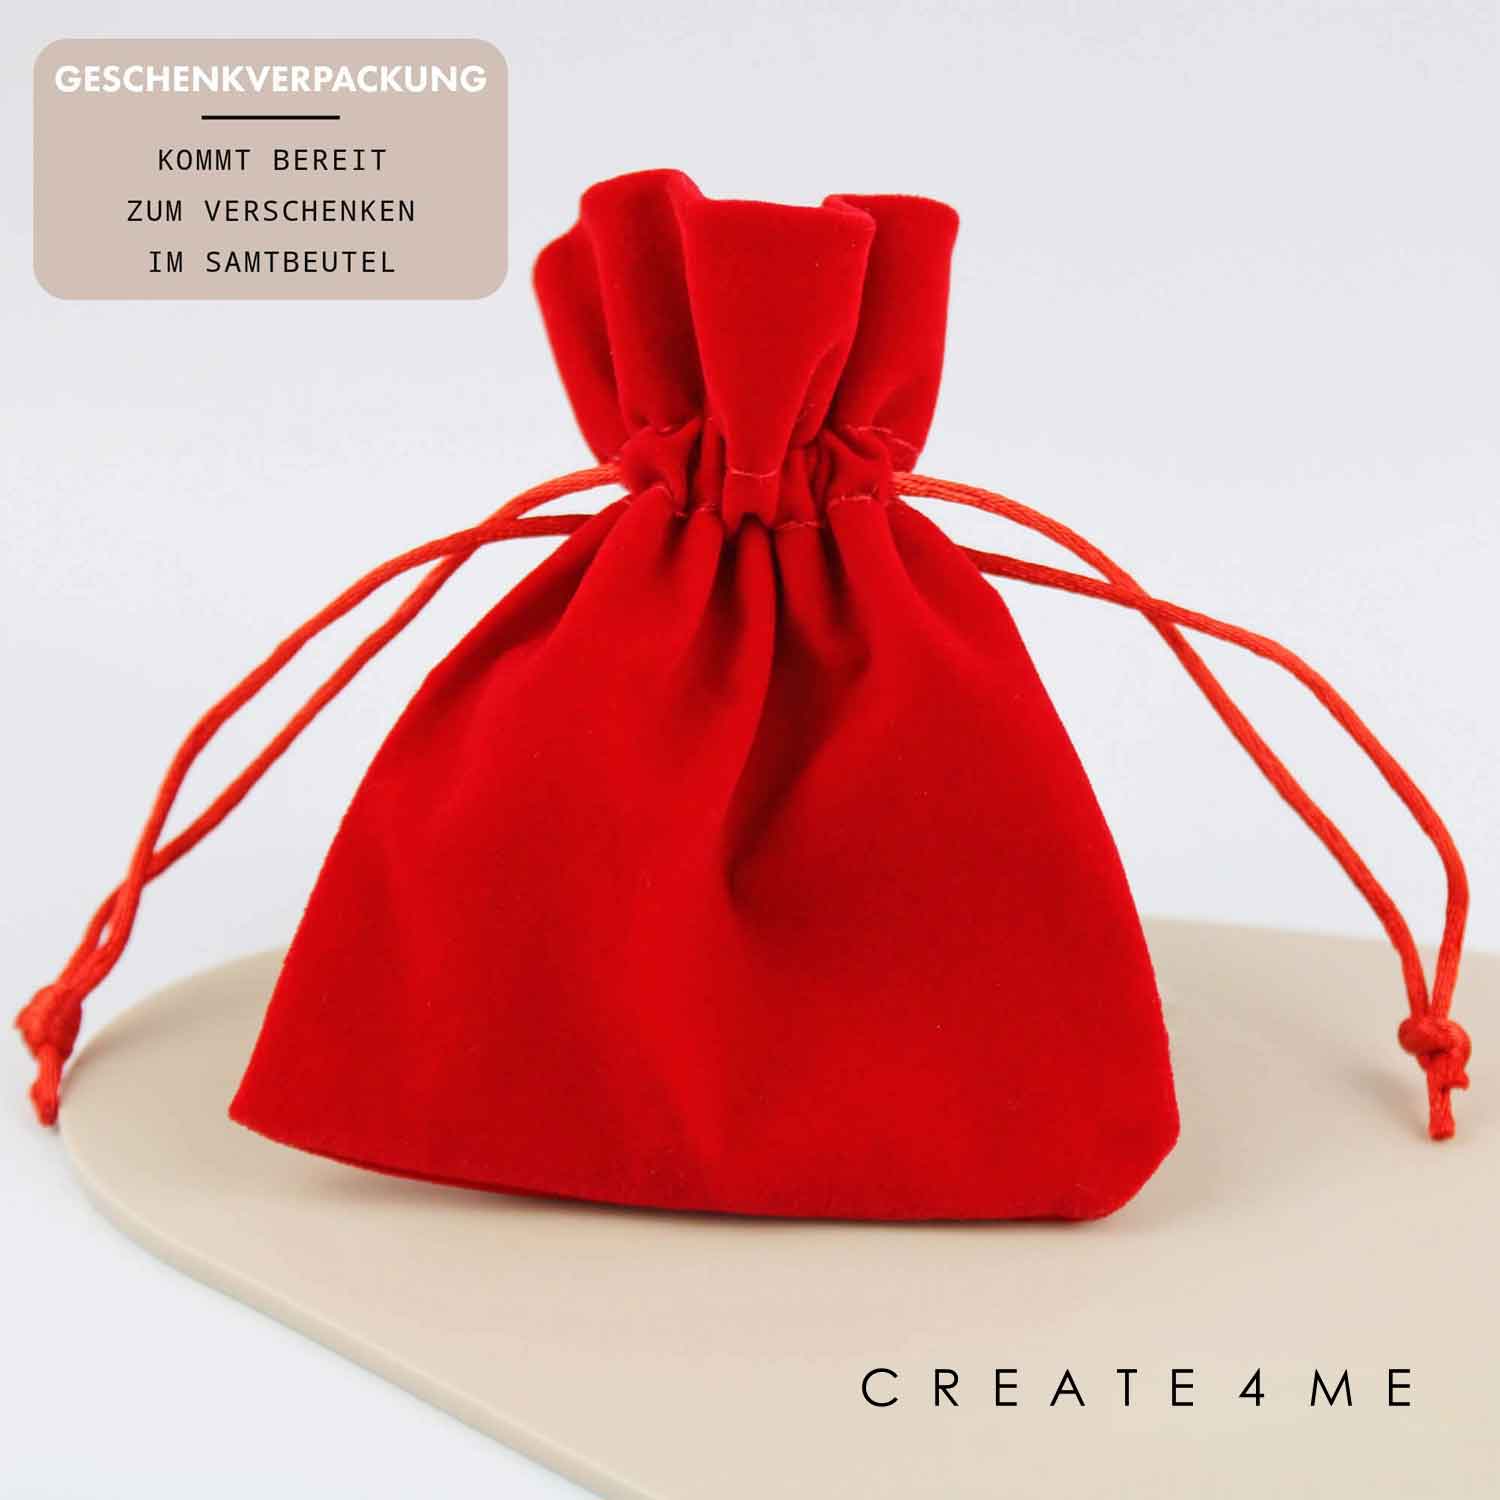 Geschenkverpackung Mega coole Tante - Schlüsselanhänger personalsisiert Create4me